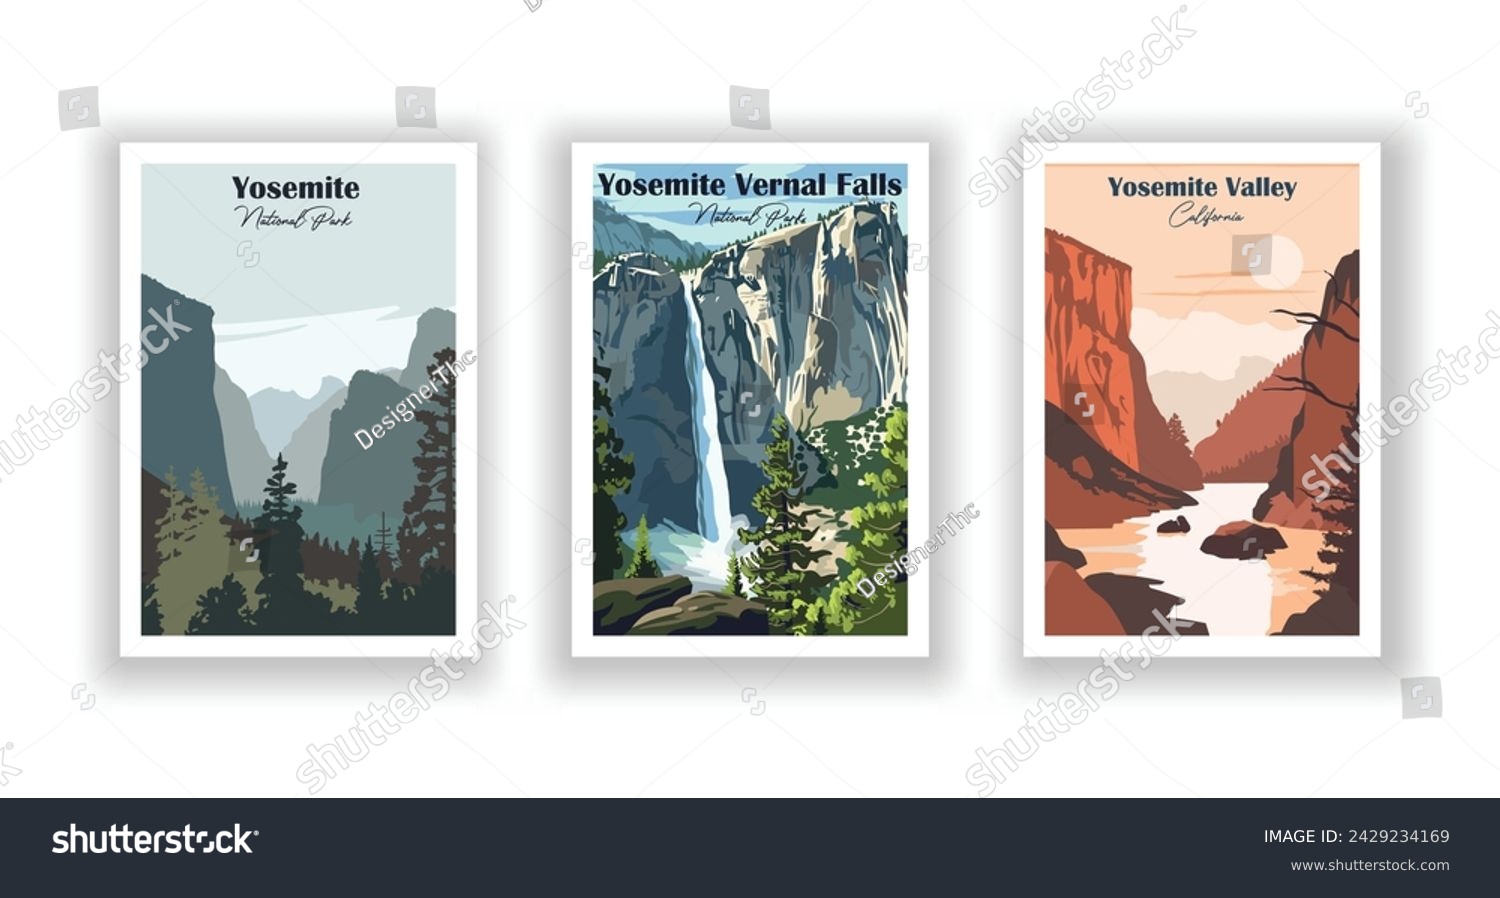 SVG of Yosemite Valley, California. Yosemite Vernal Falls, National Park. Yosemite, National Park - Vintage travel poster. Vector illustration. High quality prints svg